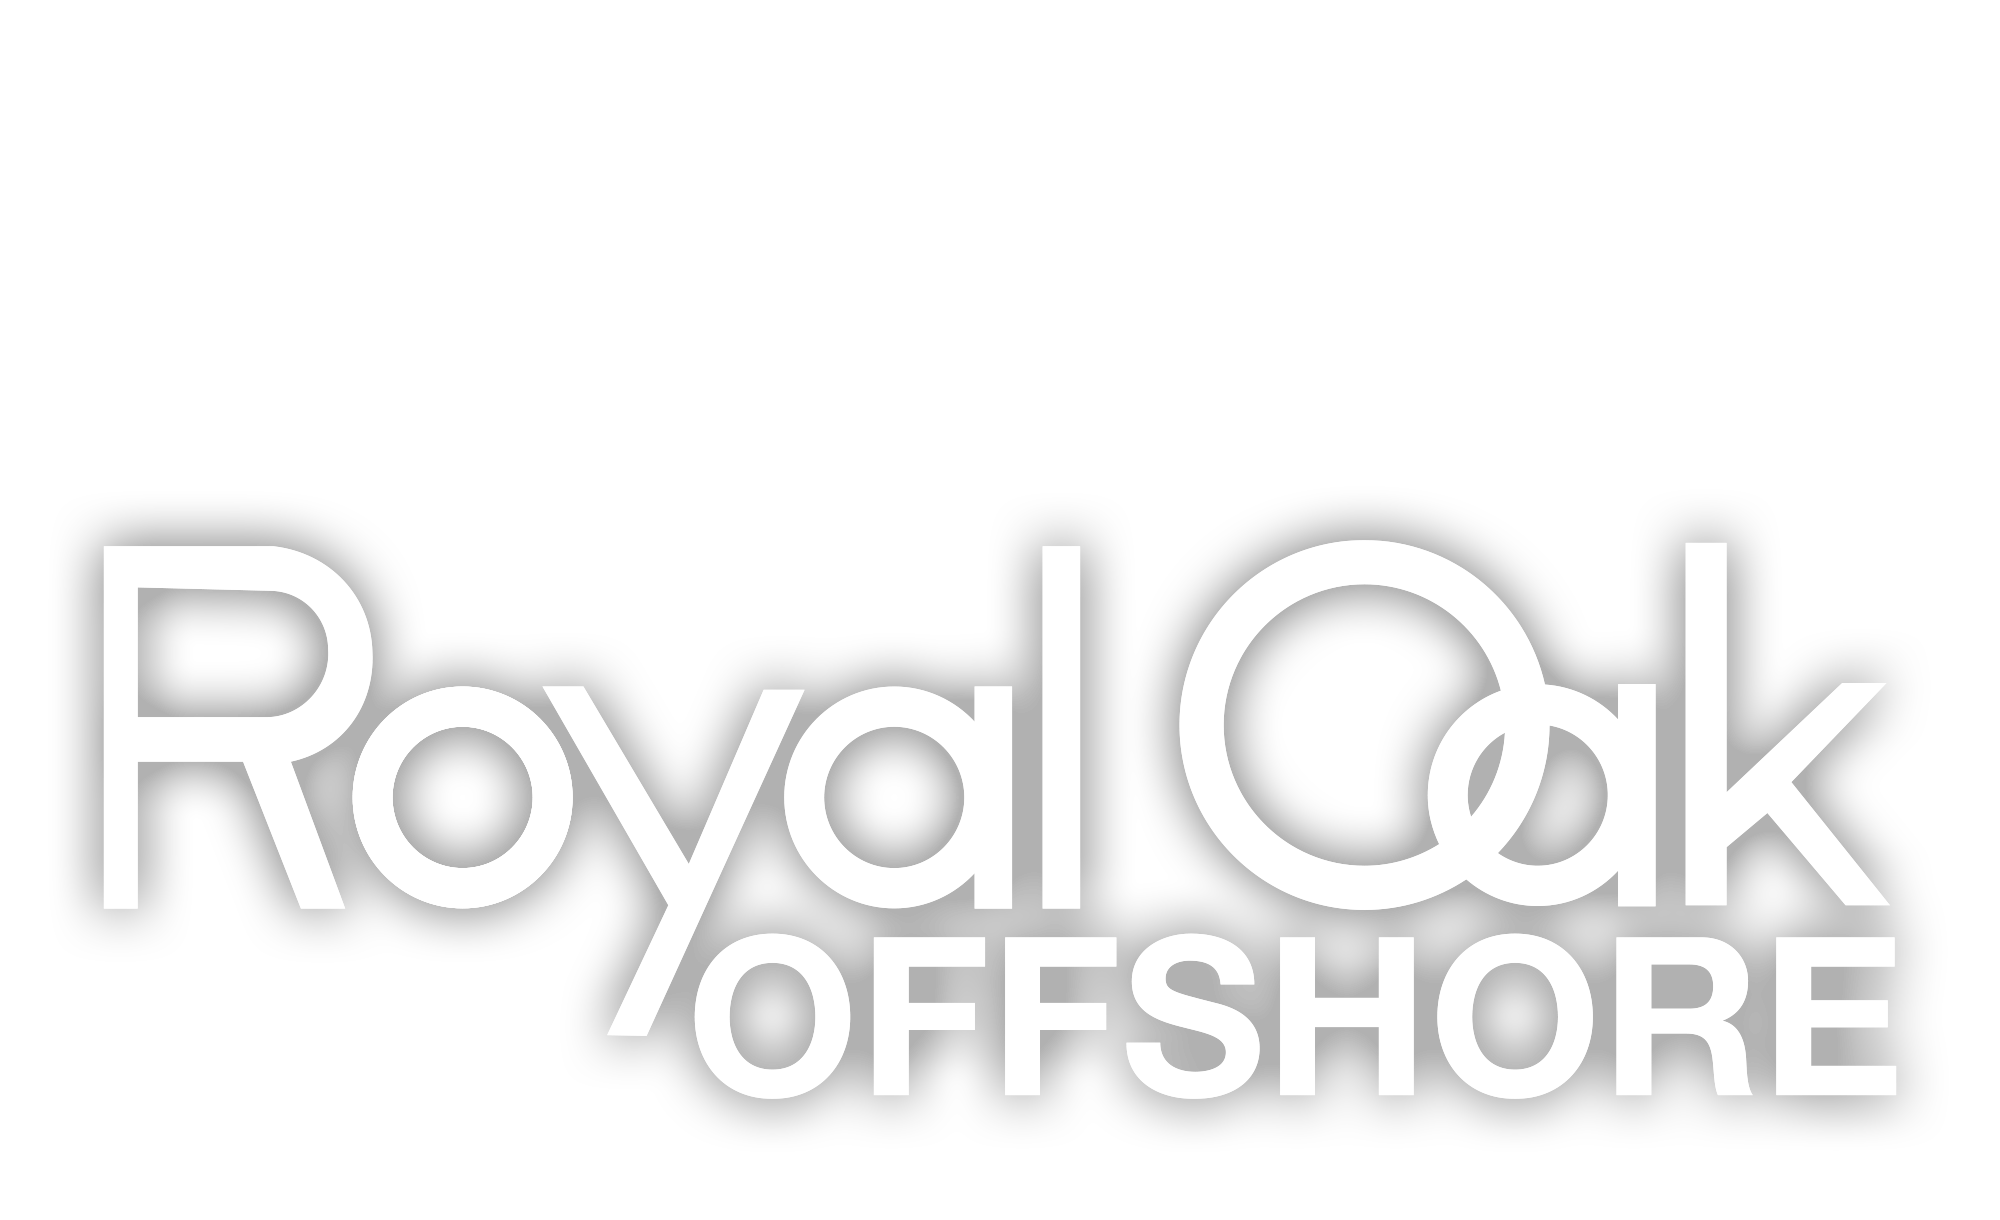 Collection Royal Oak Offshore